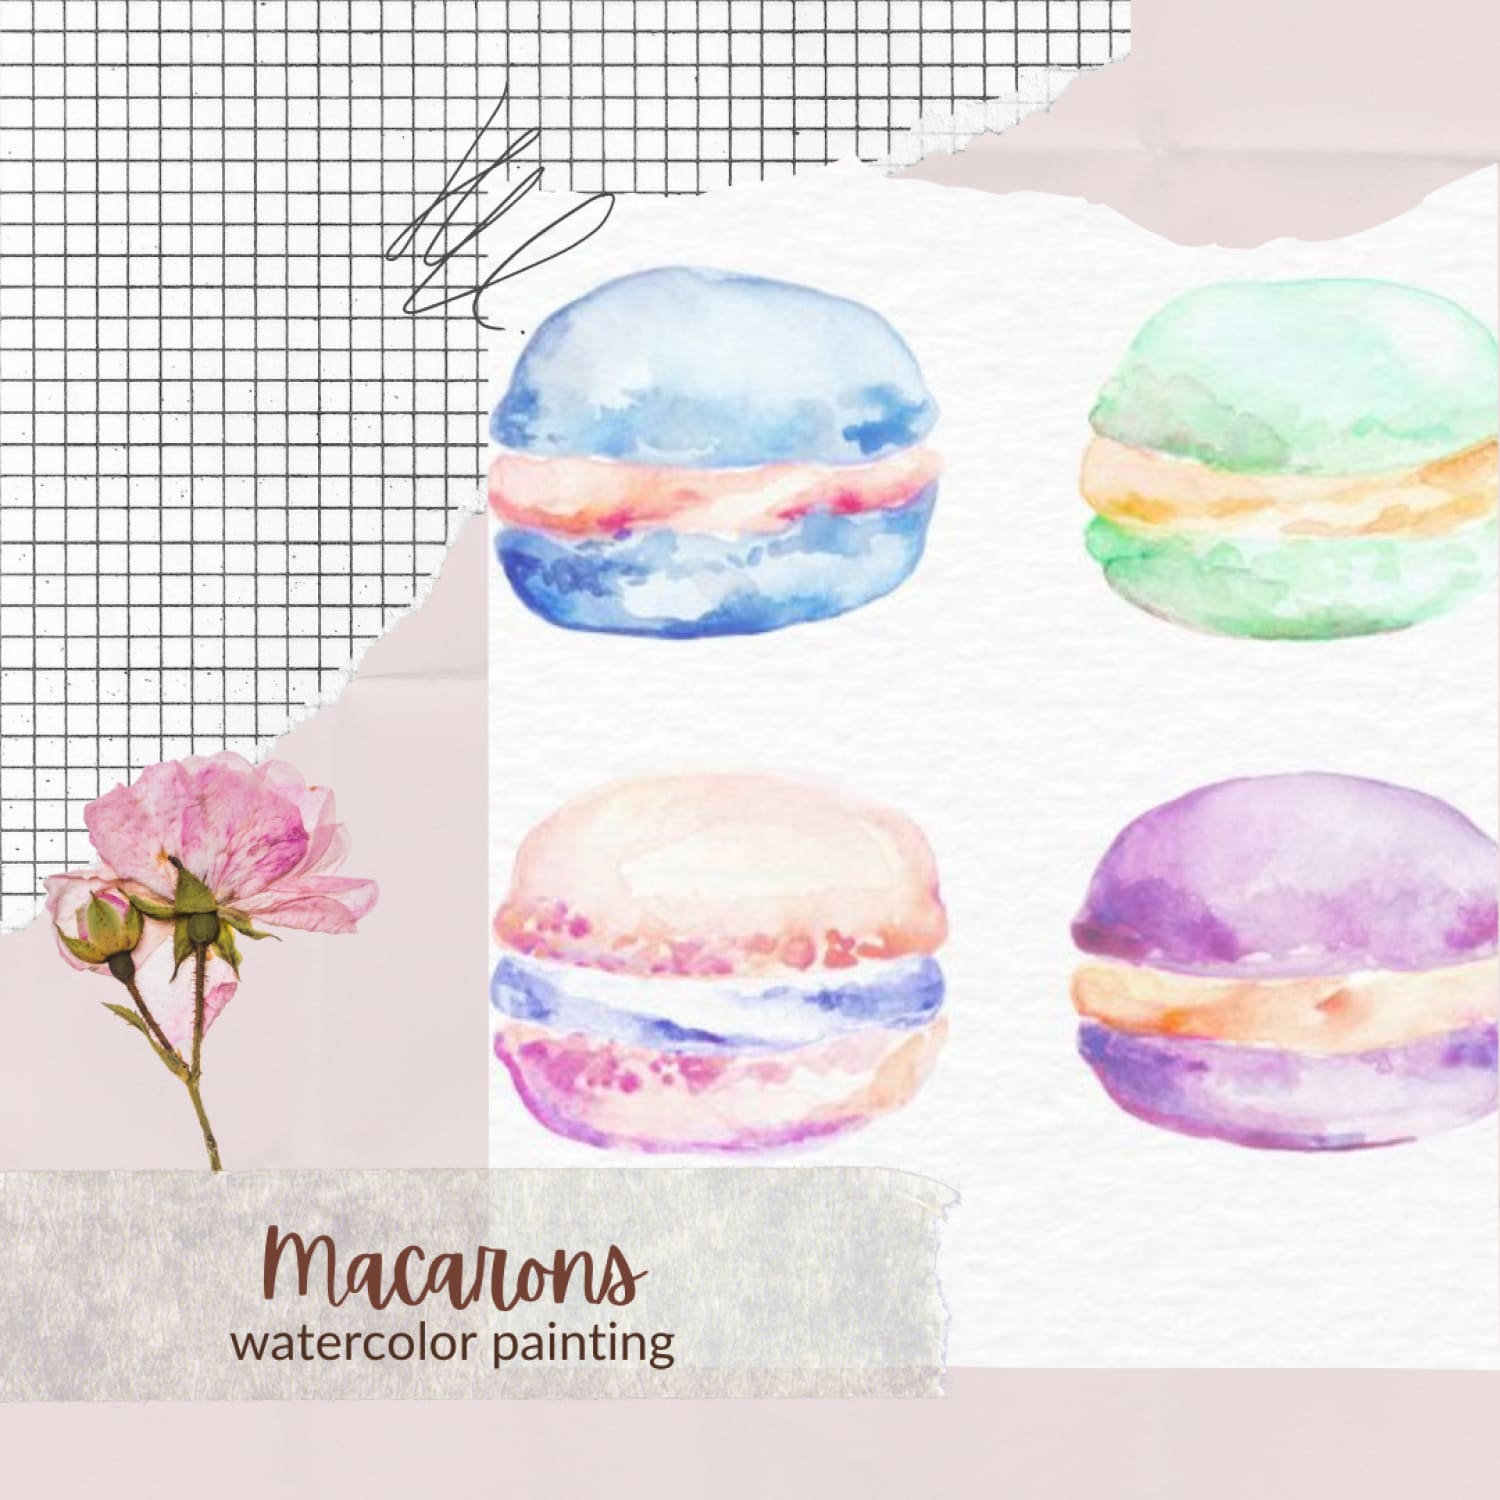 Macarons Watercolor Painting.